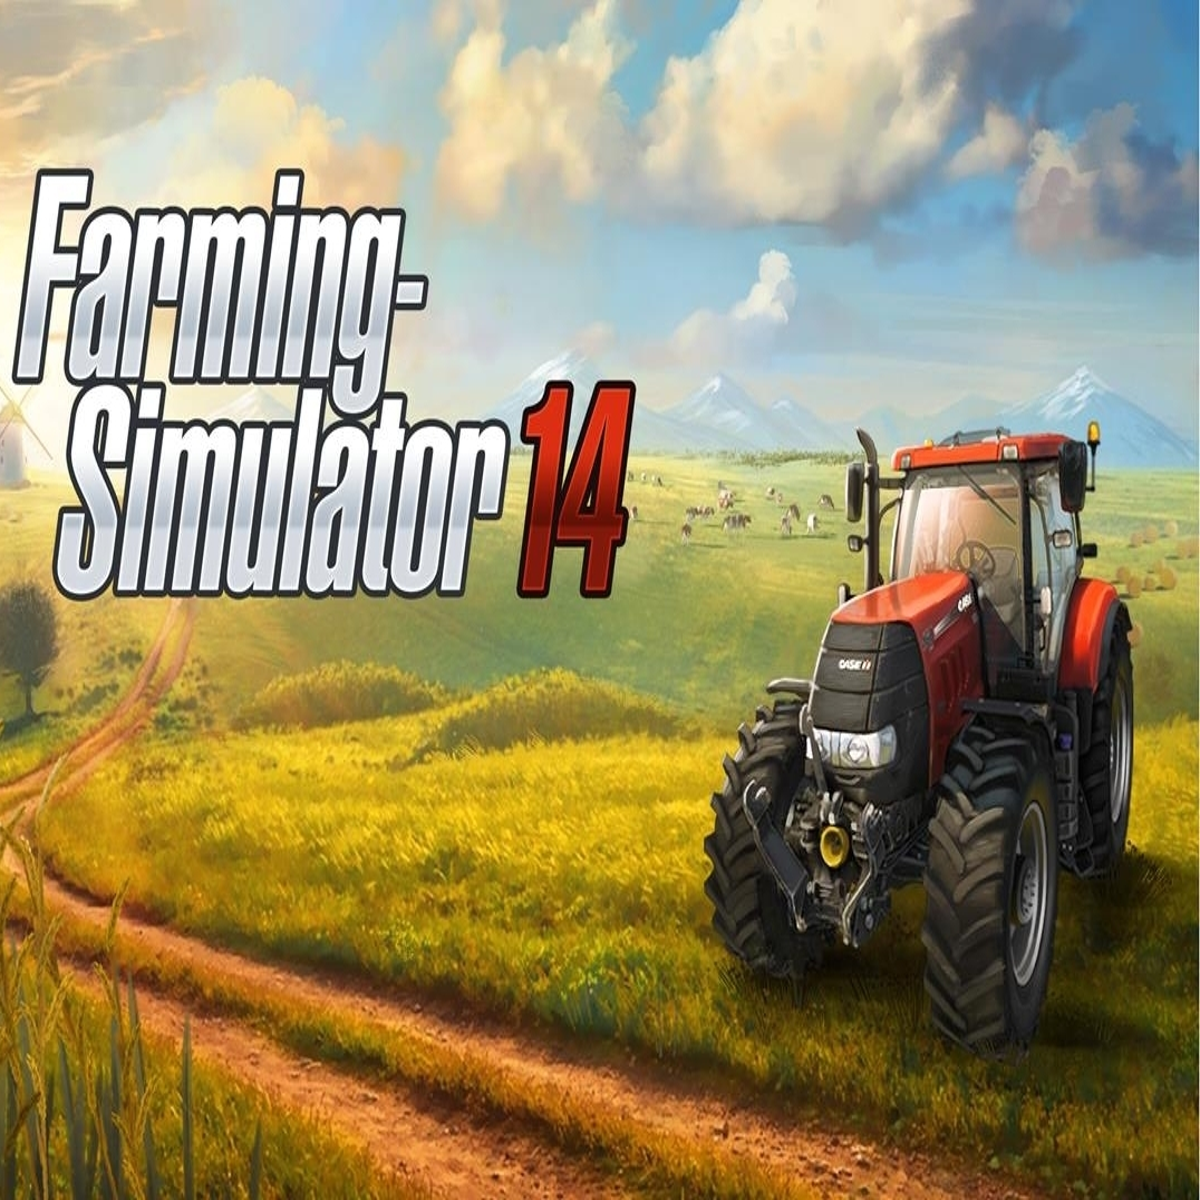 Farming Simulator 23 Simulator android iOS apk download for free